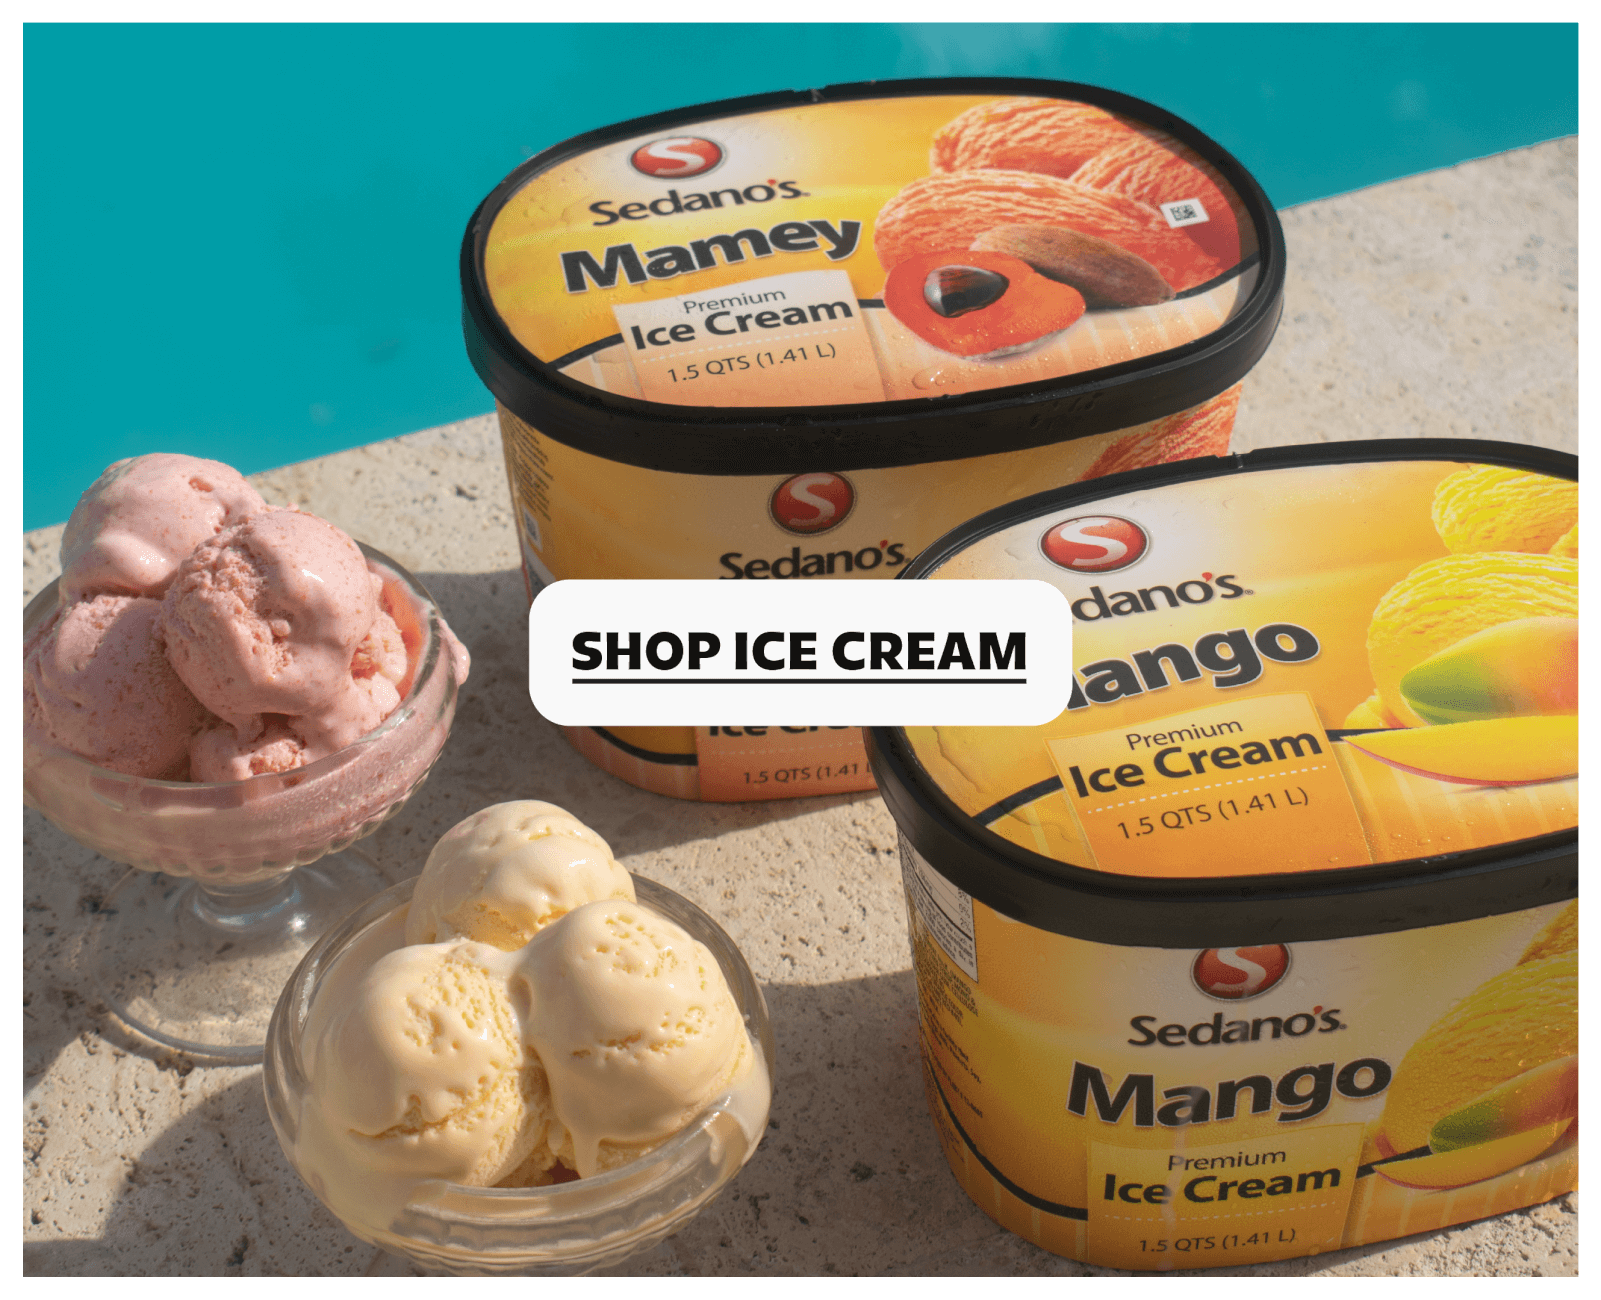 Sedano's Ice Cream at Sedanos.com